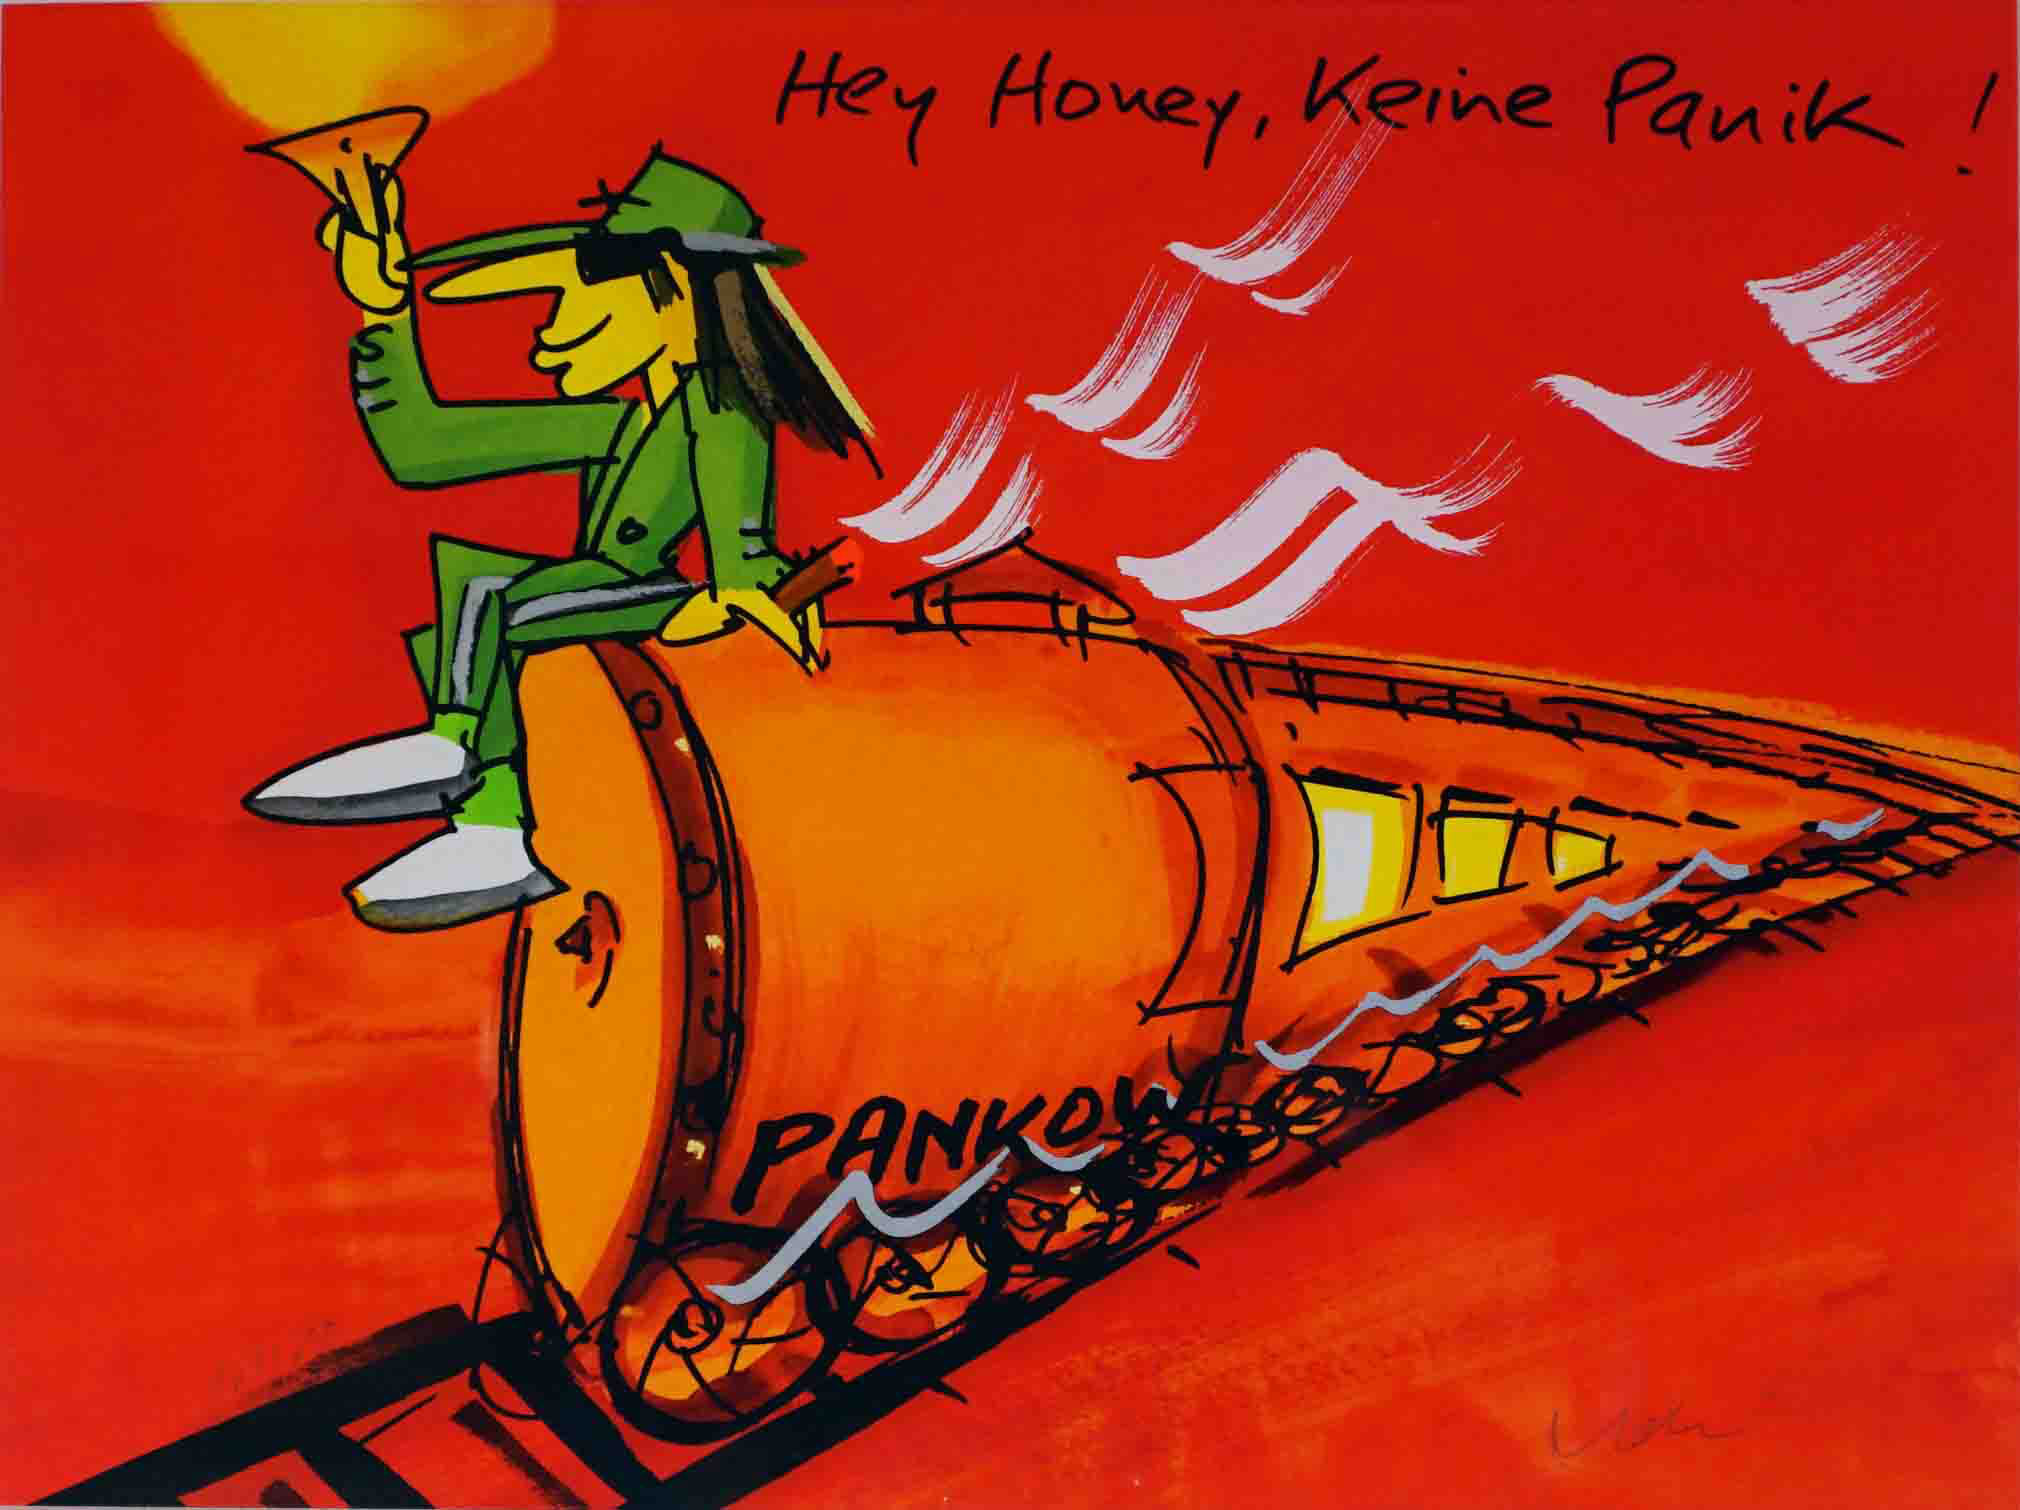 Udo Lindenberg "Hey Honey Keine Panik"